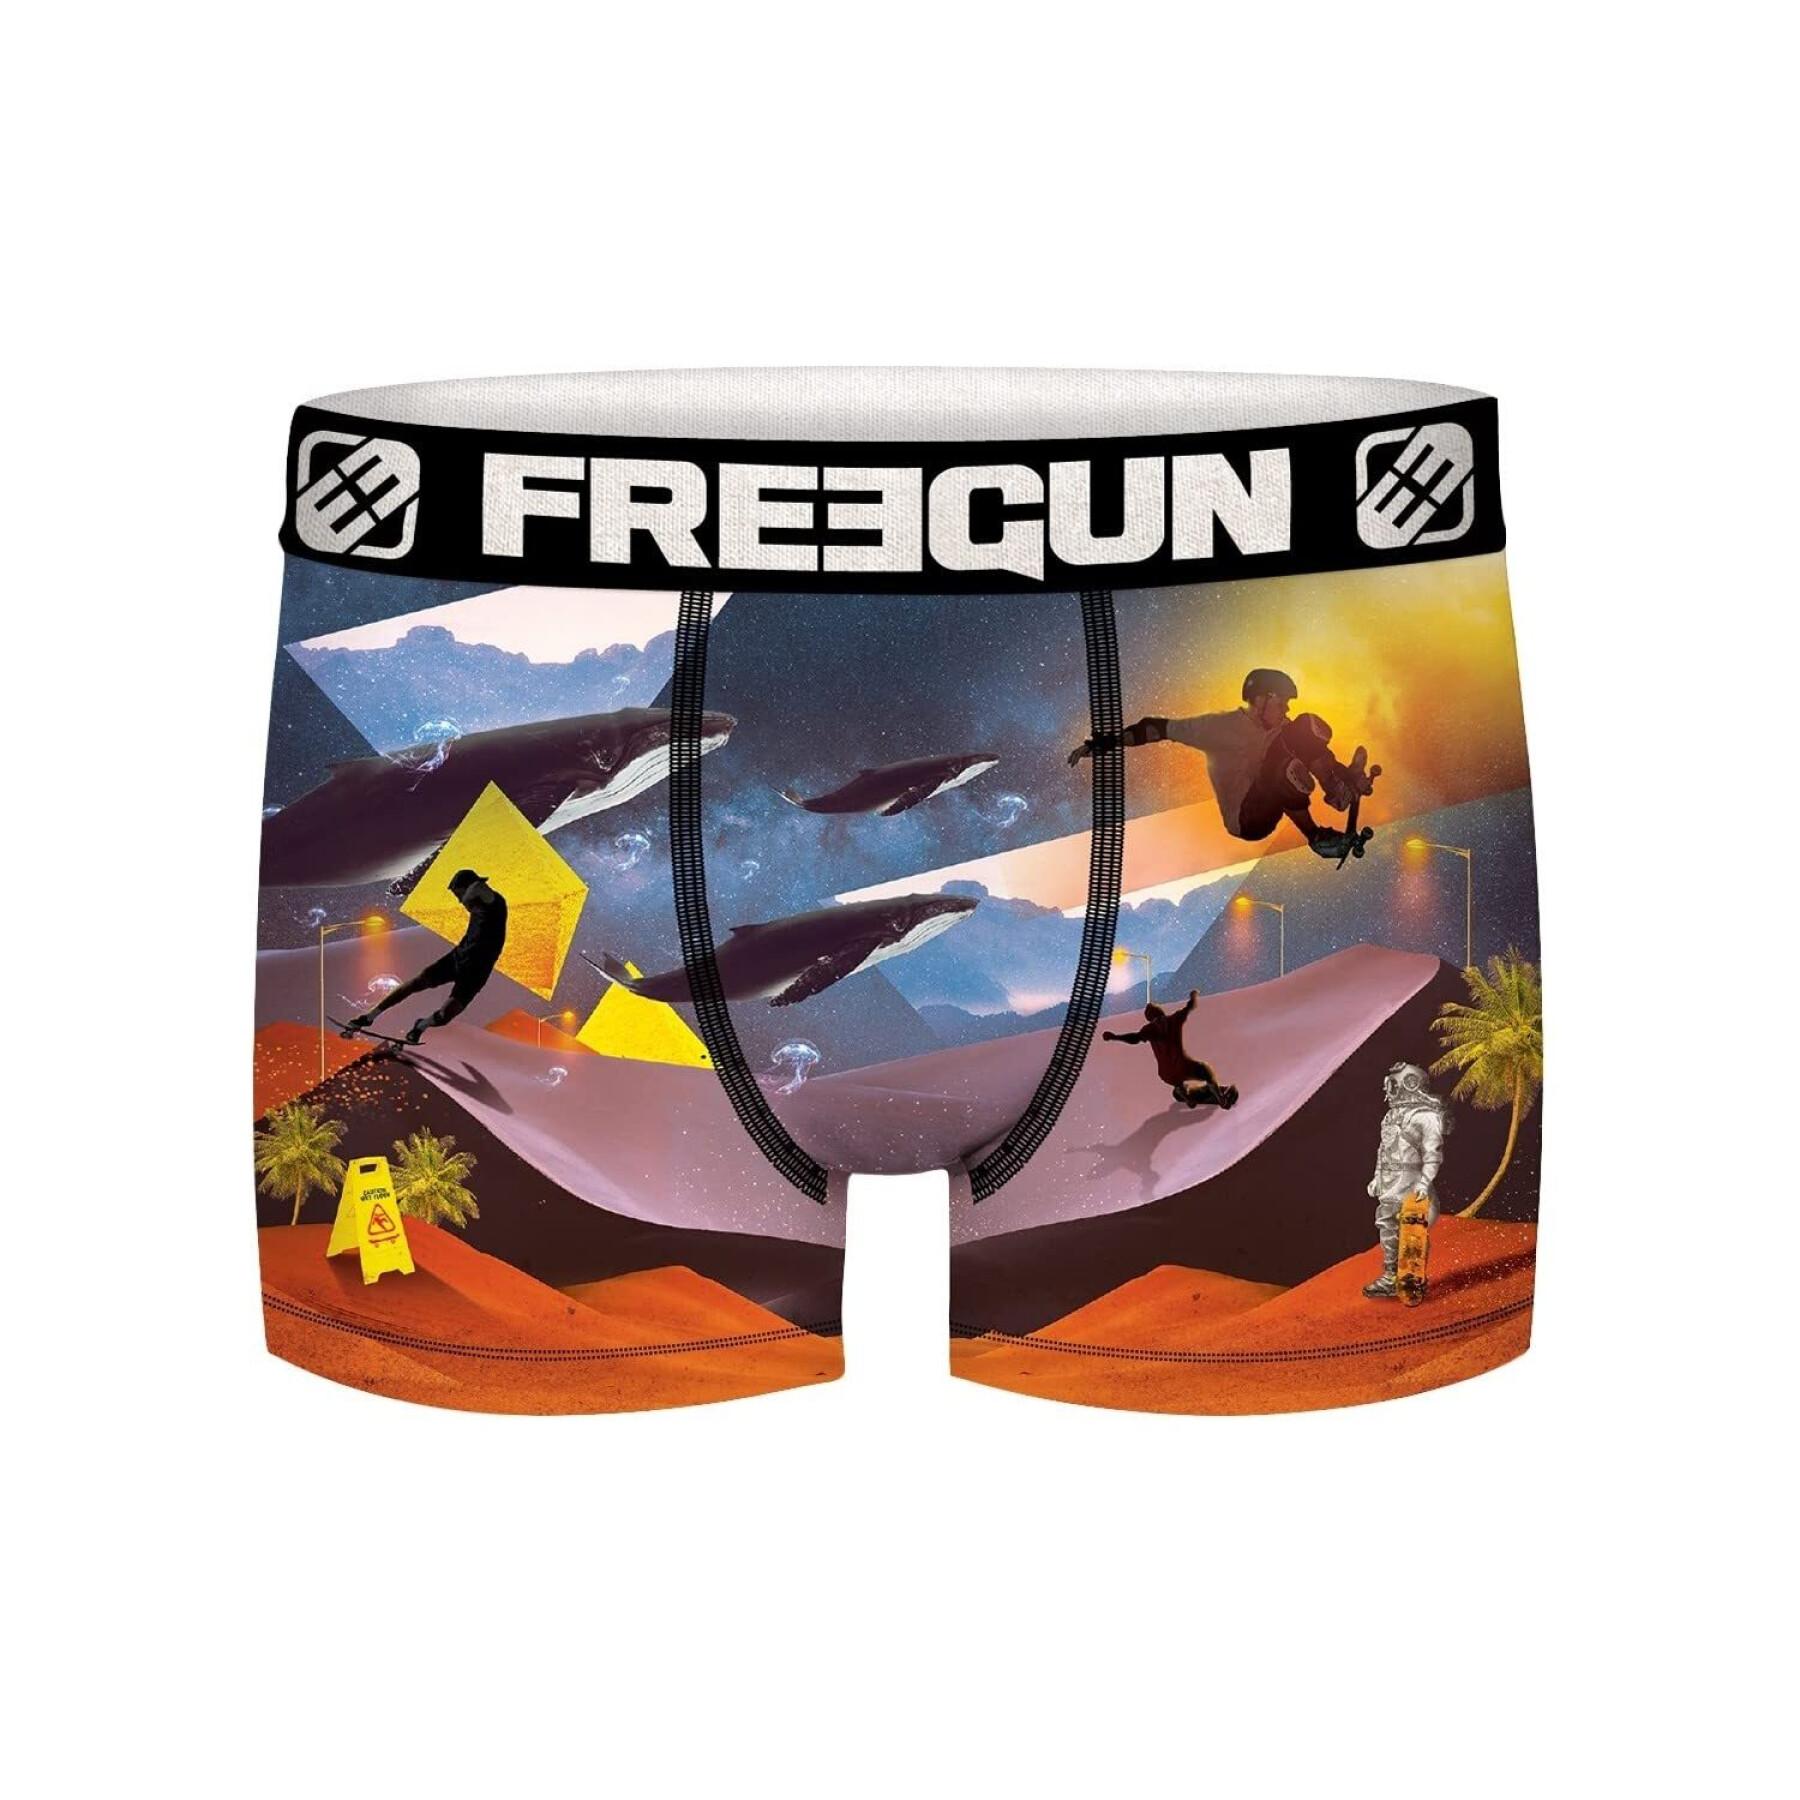 Surreal skateboard and surf boxer shorts for kids Freegun